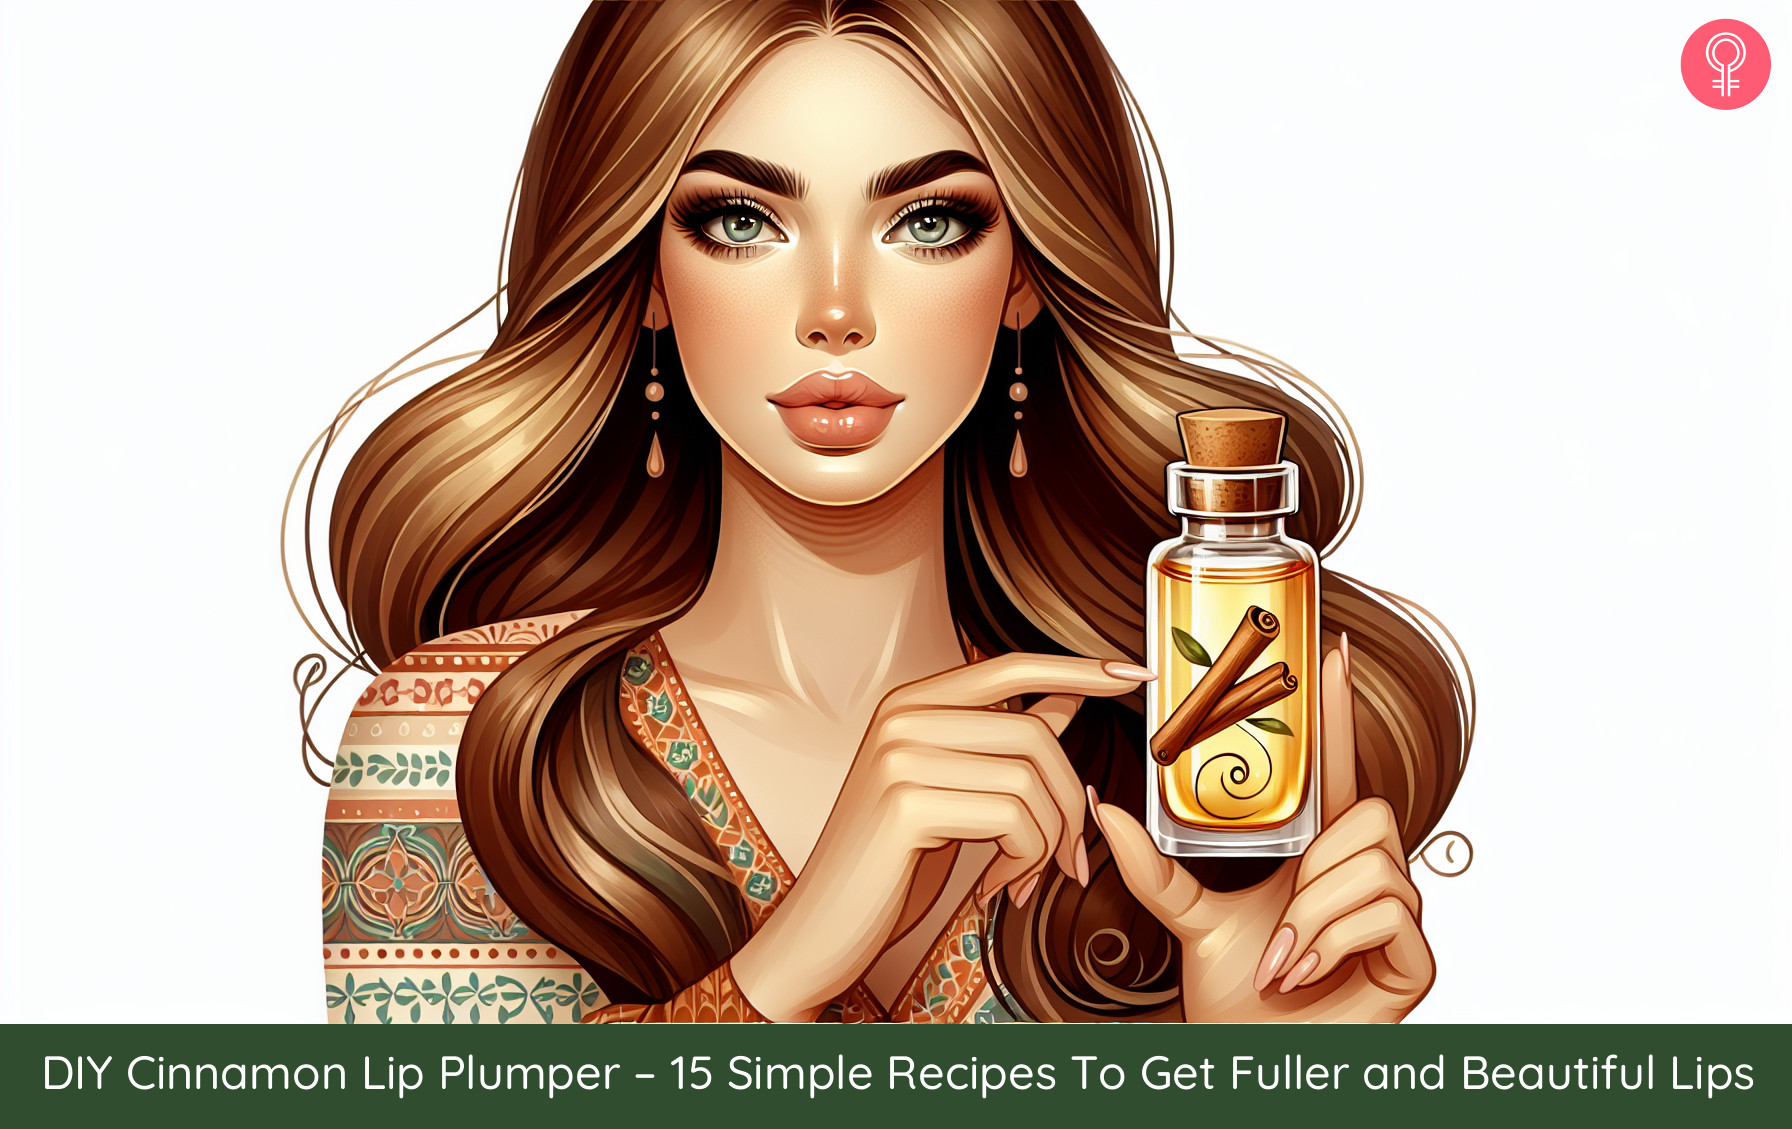 cinnamon oil for lips